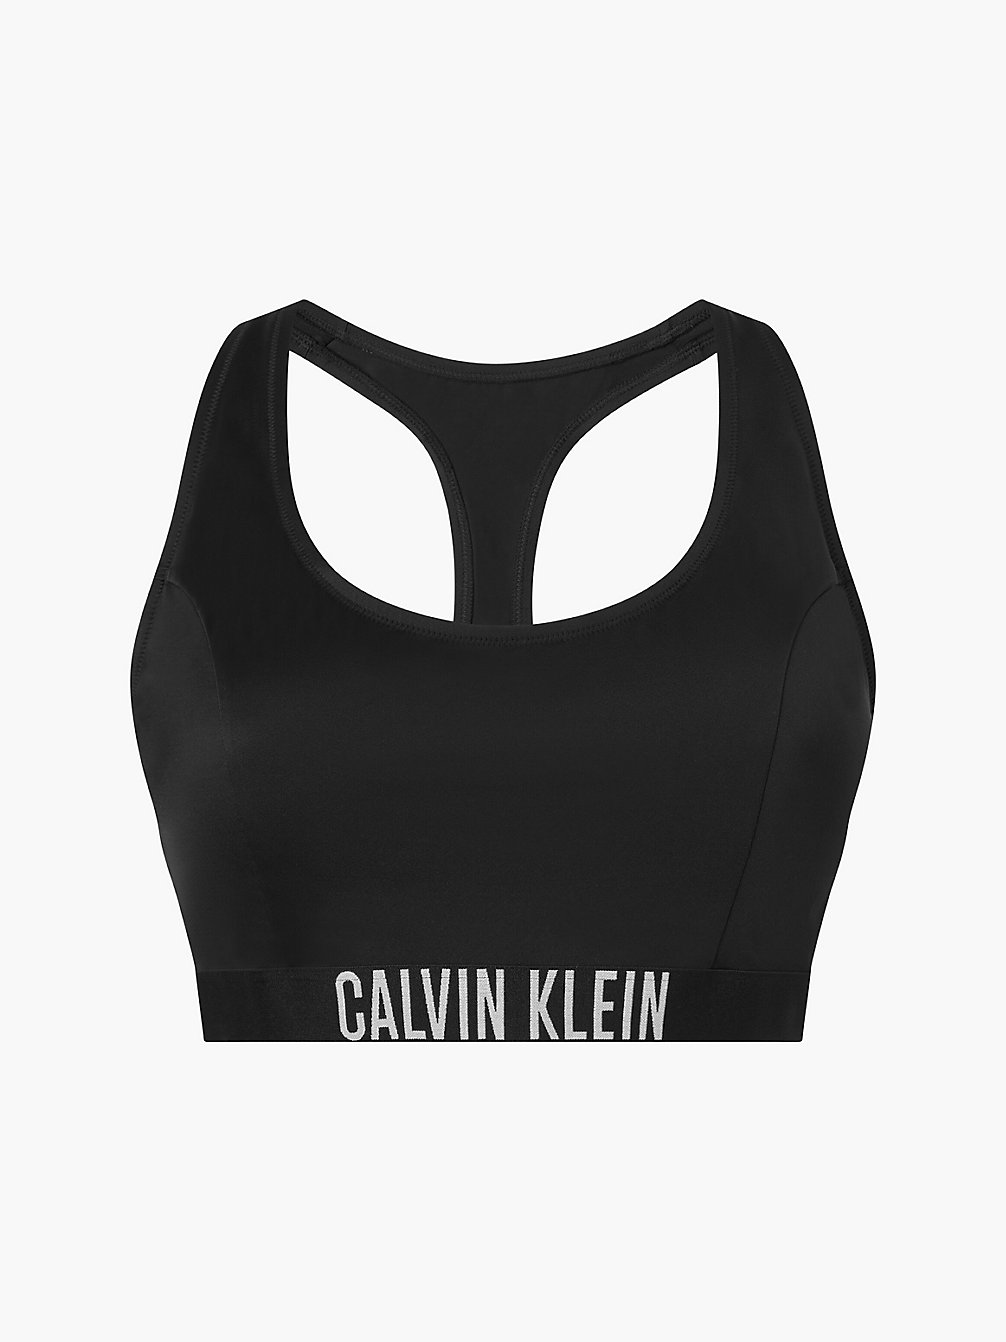 PVH BLACK Grote Maat Bralette Bikinitop - Intense Power undefined dames Calvin Klein